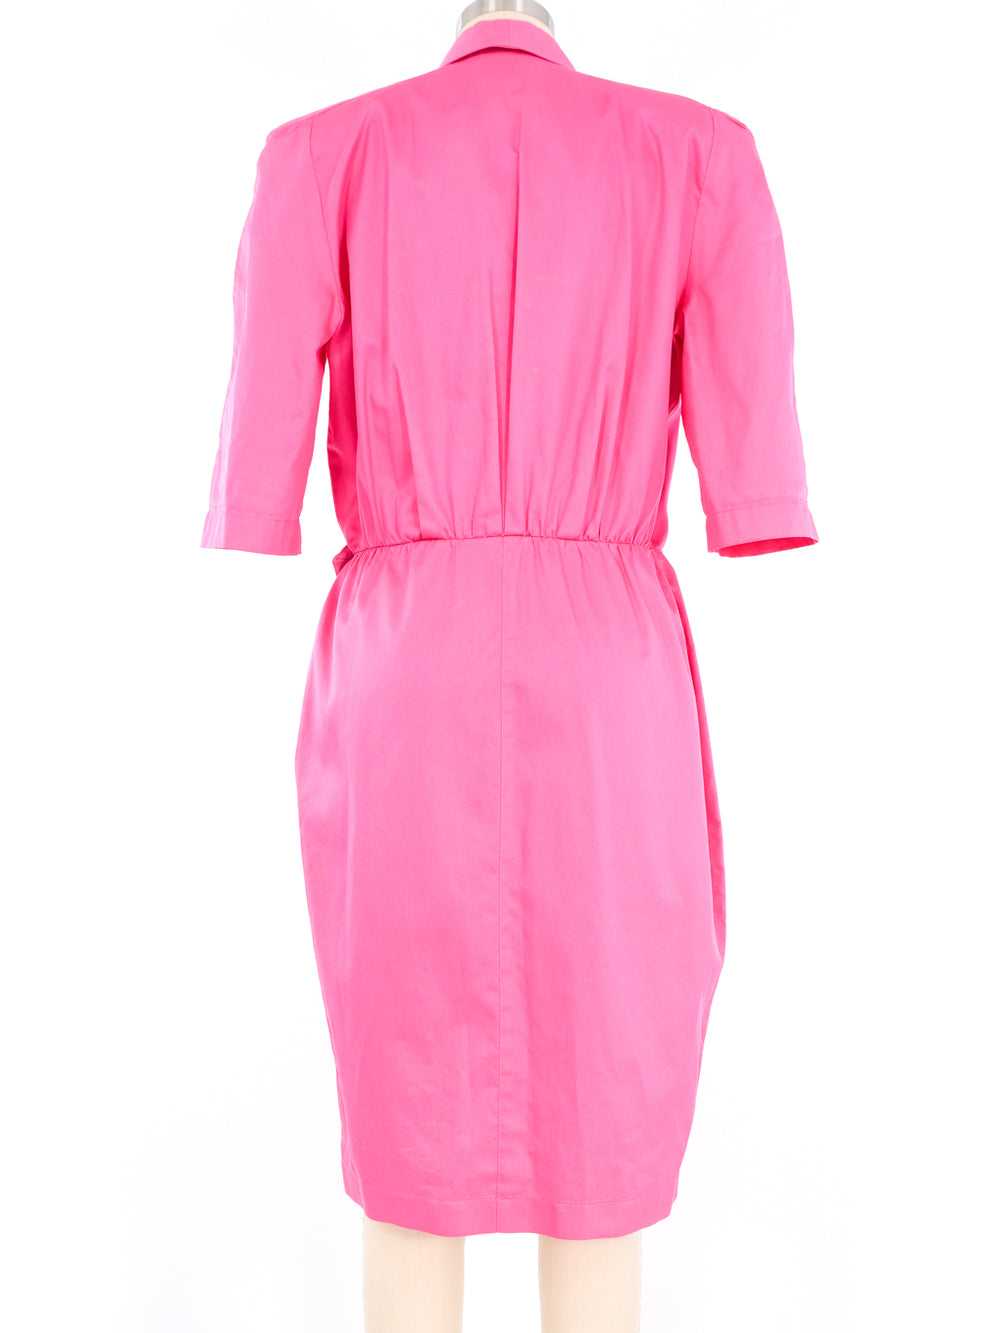 Thierry Mugler Pink Wrap Front Dress - image 4